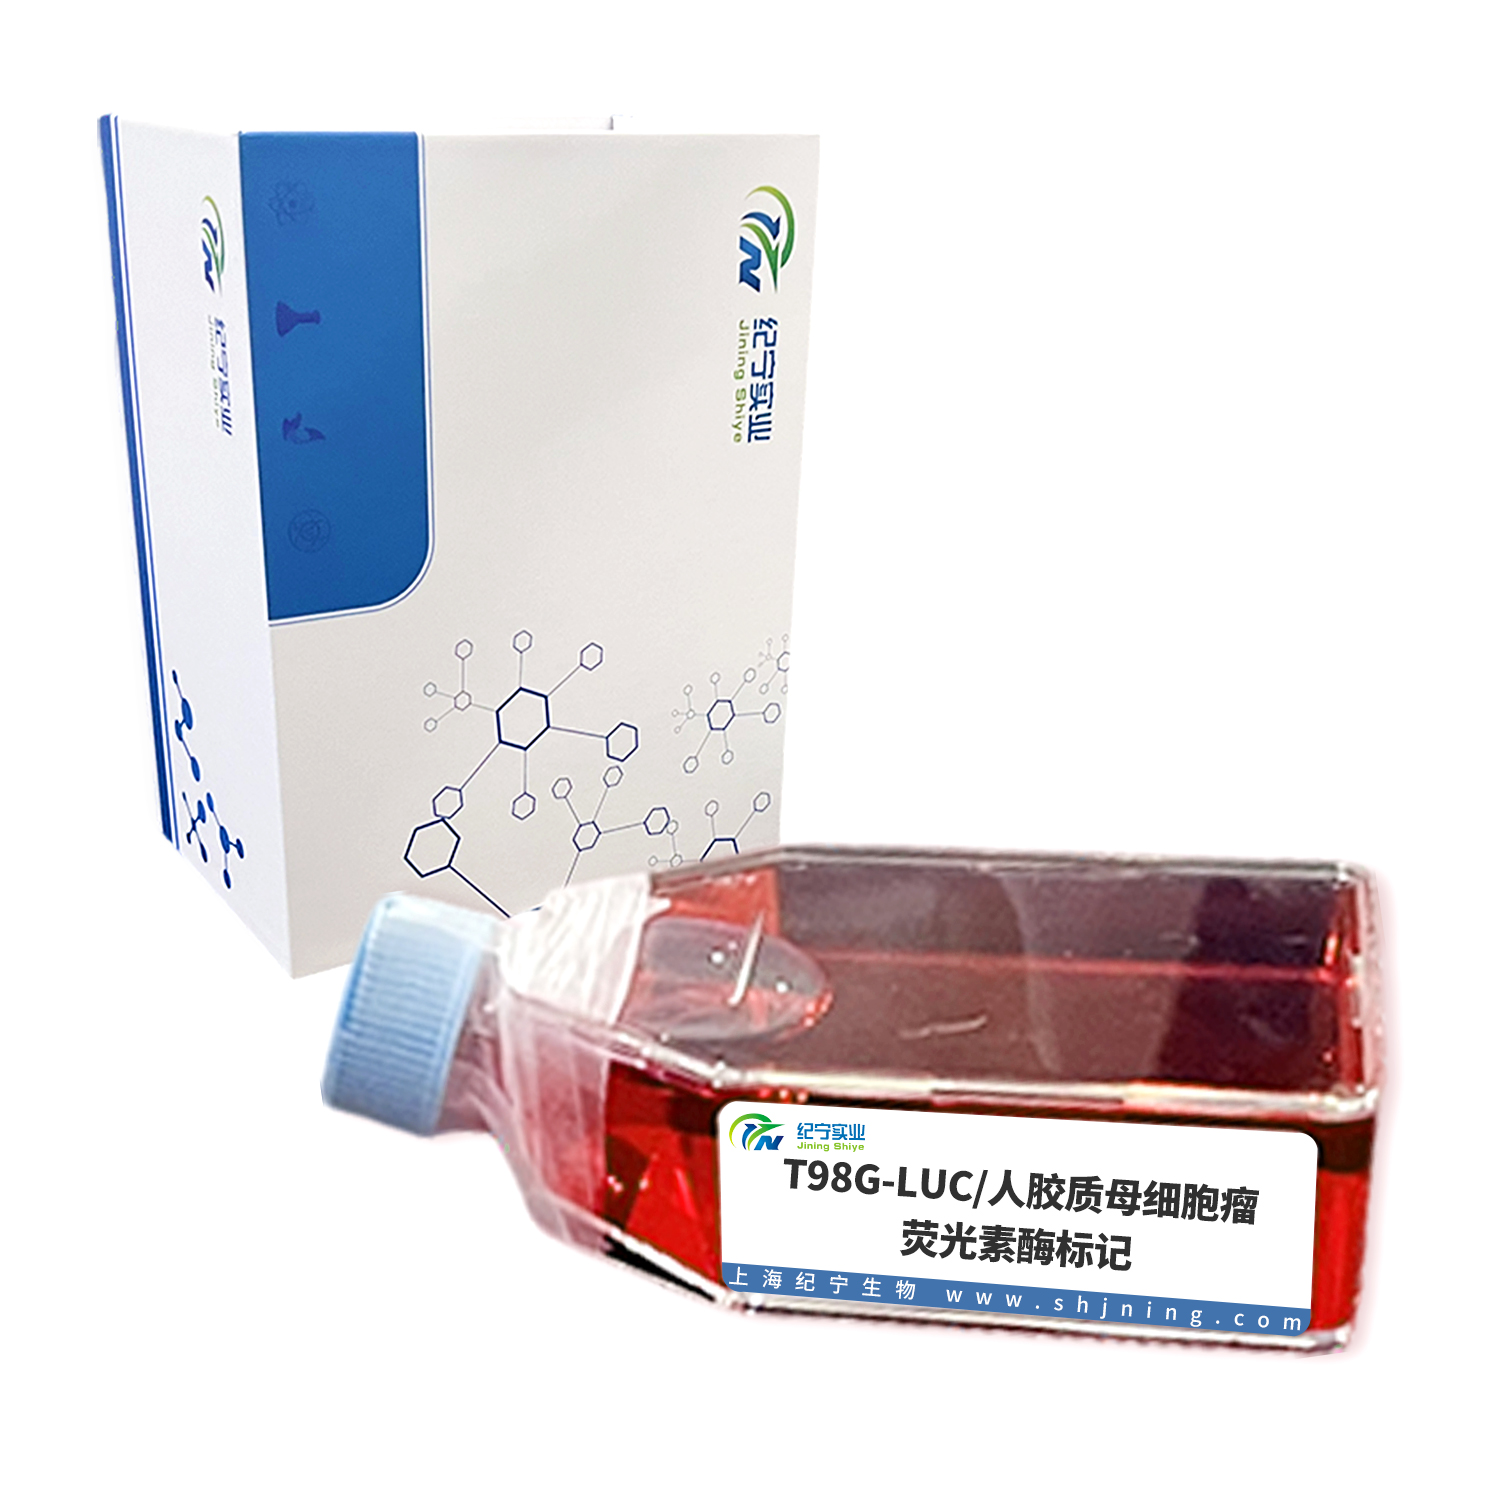 T98G-LUC/人胶质母细胞瘤-荧光素酶标记